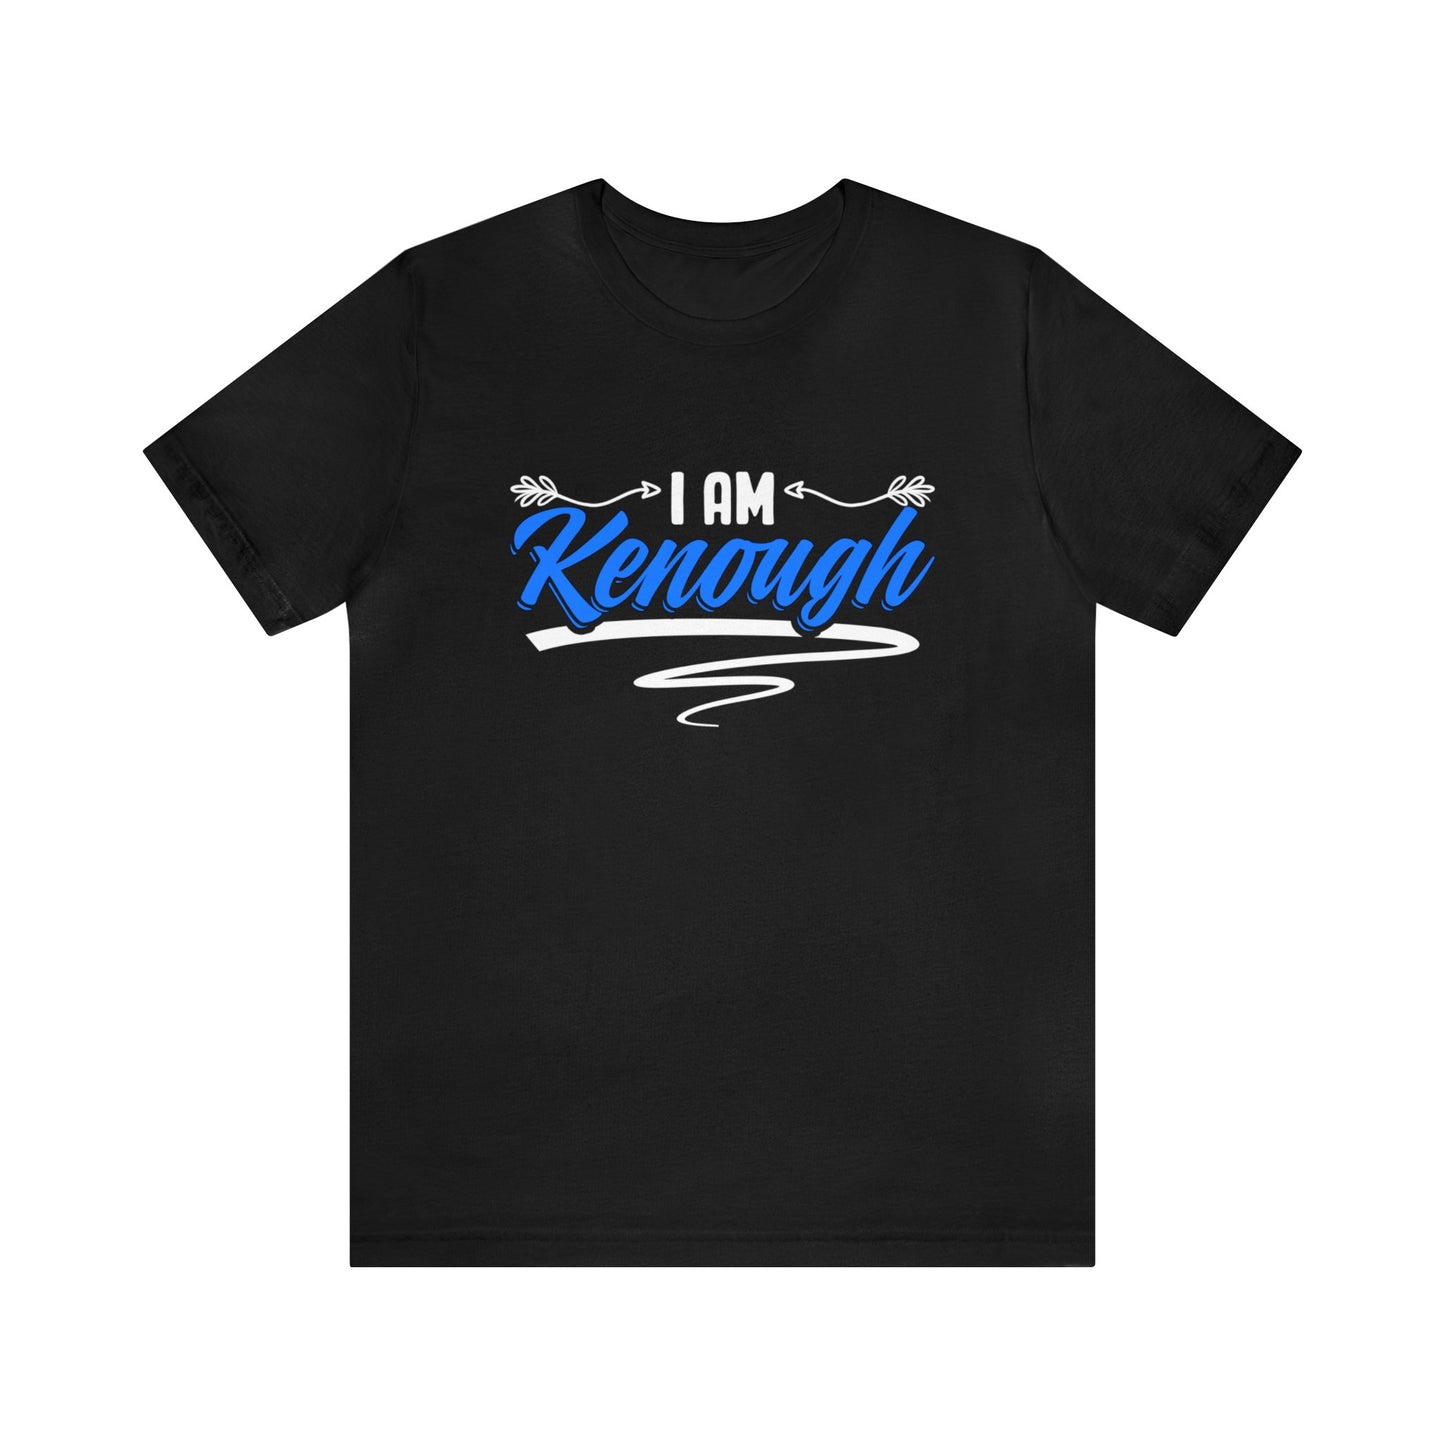 I Am Kenough Unisex T-Shirt